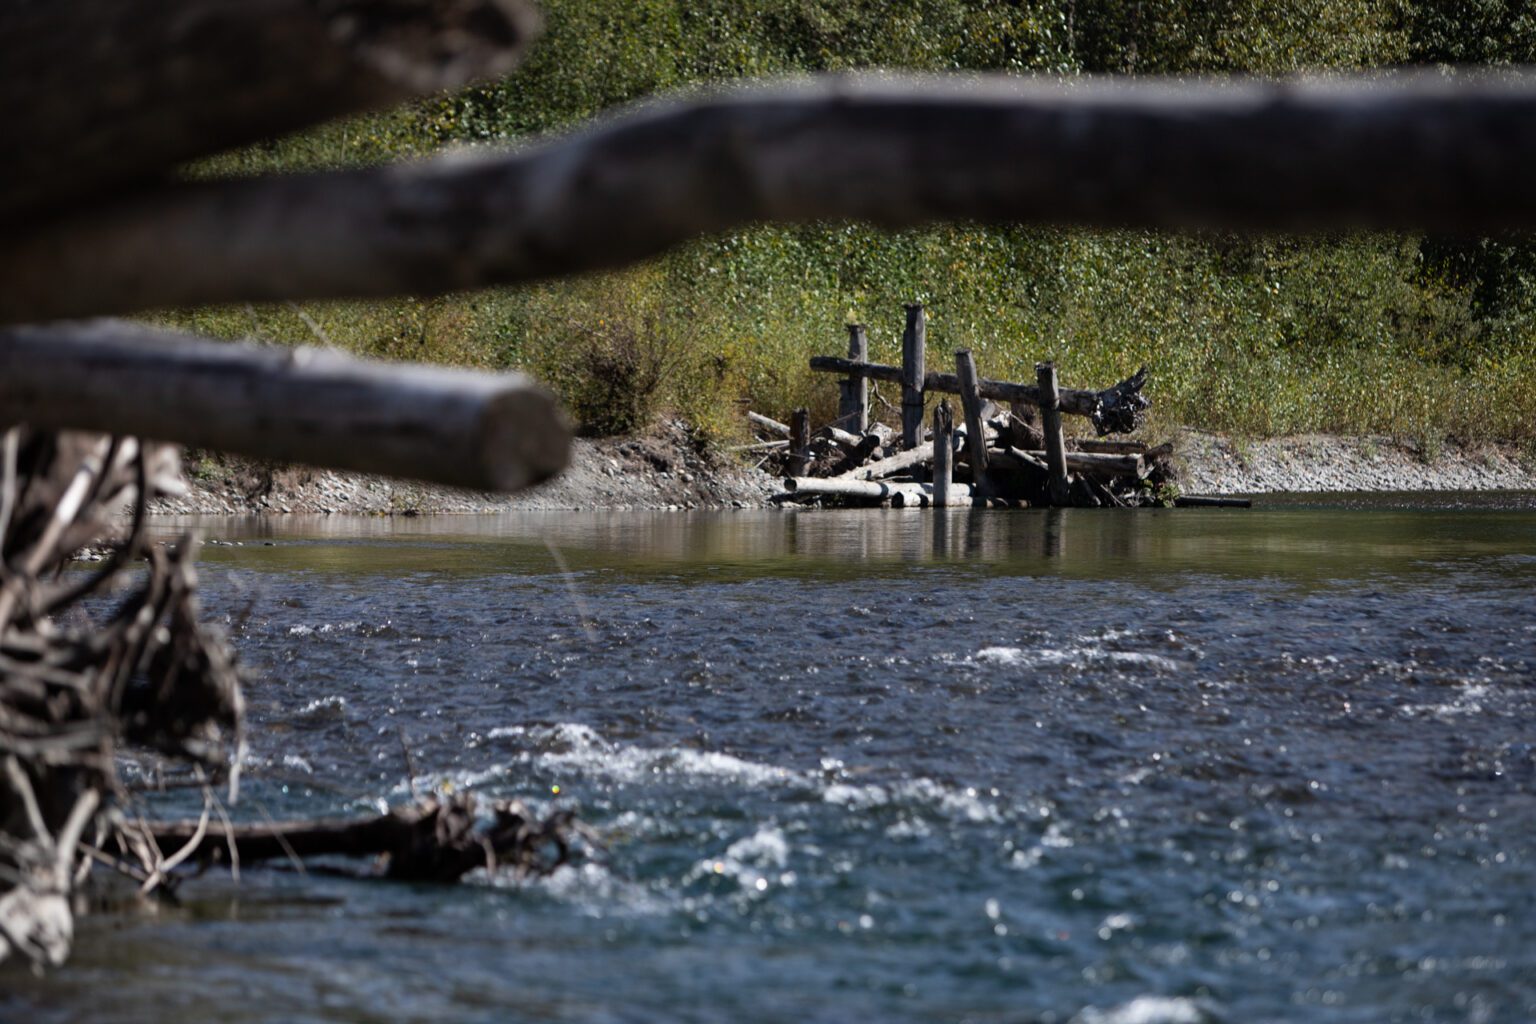 Manmade logjams create salmon habitats along the South Fork Nooksack River. The logjams disrupt the water flow and create deep